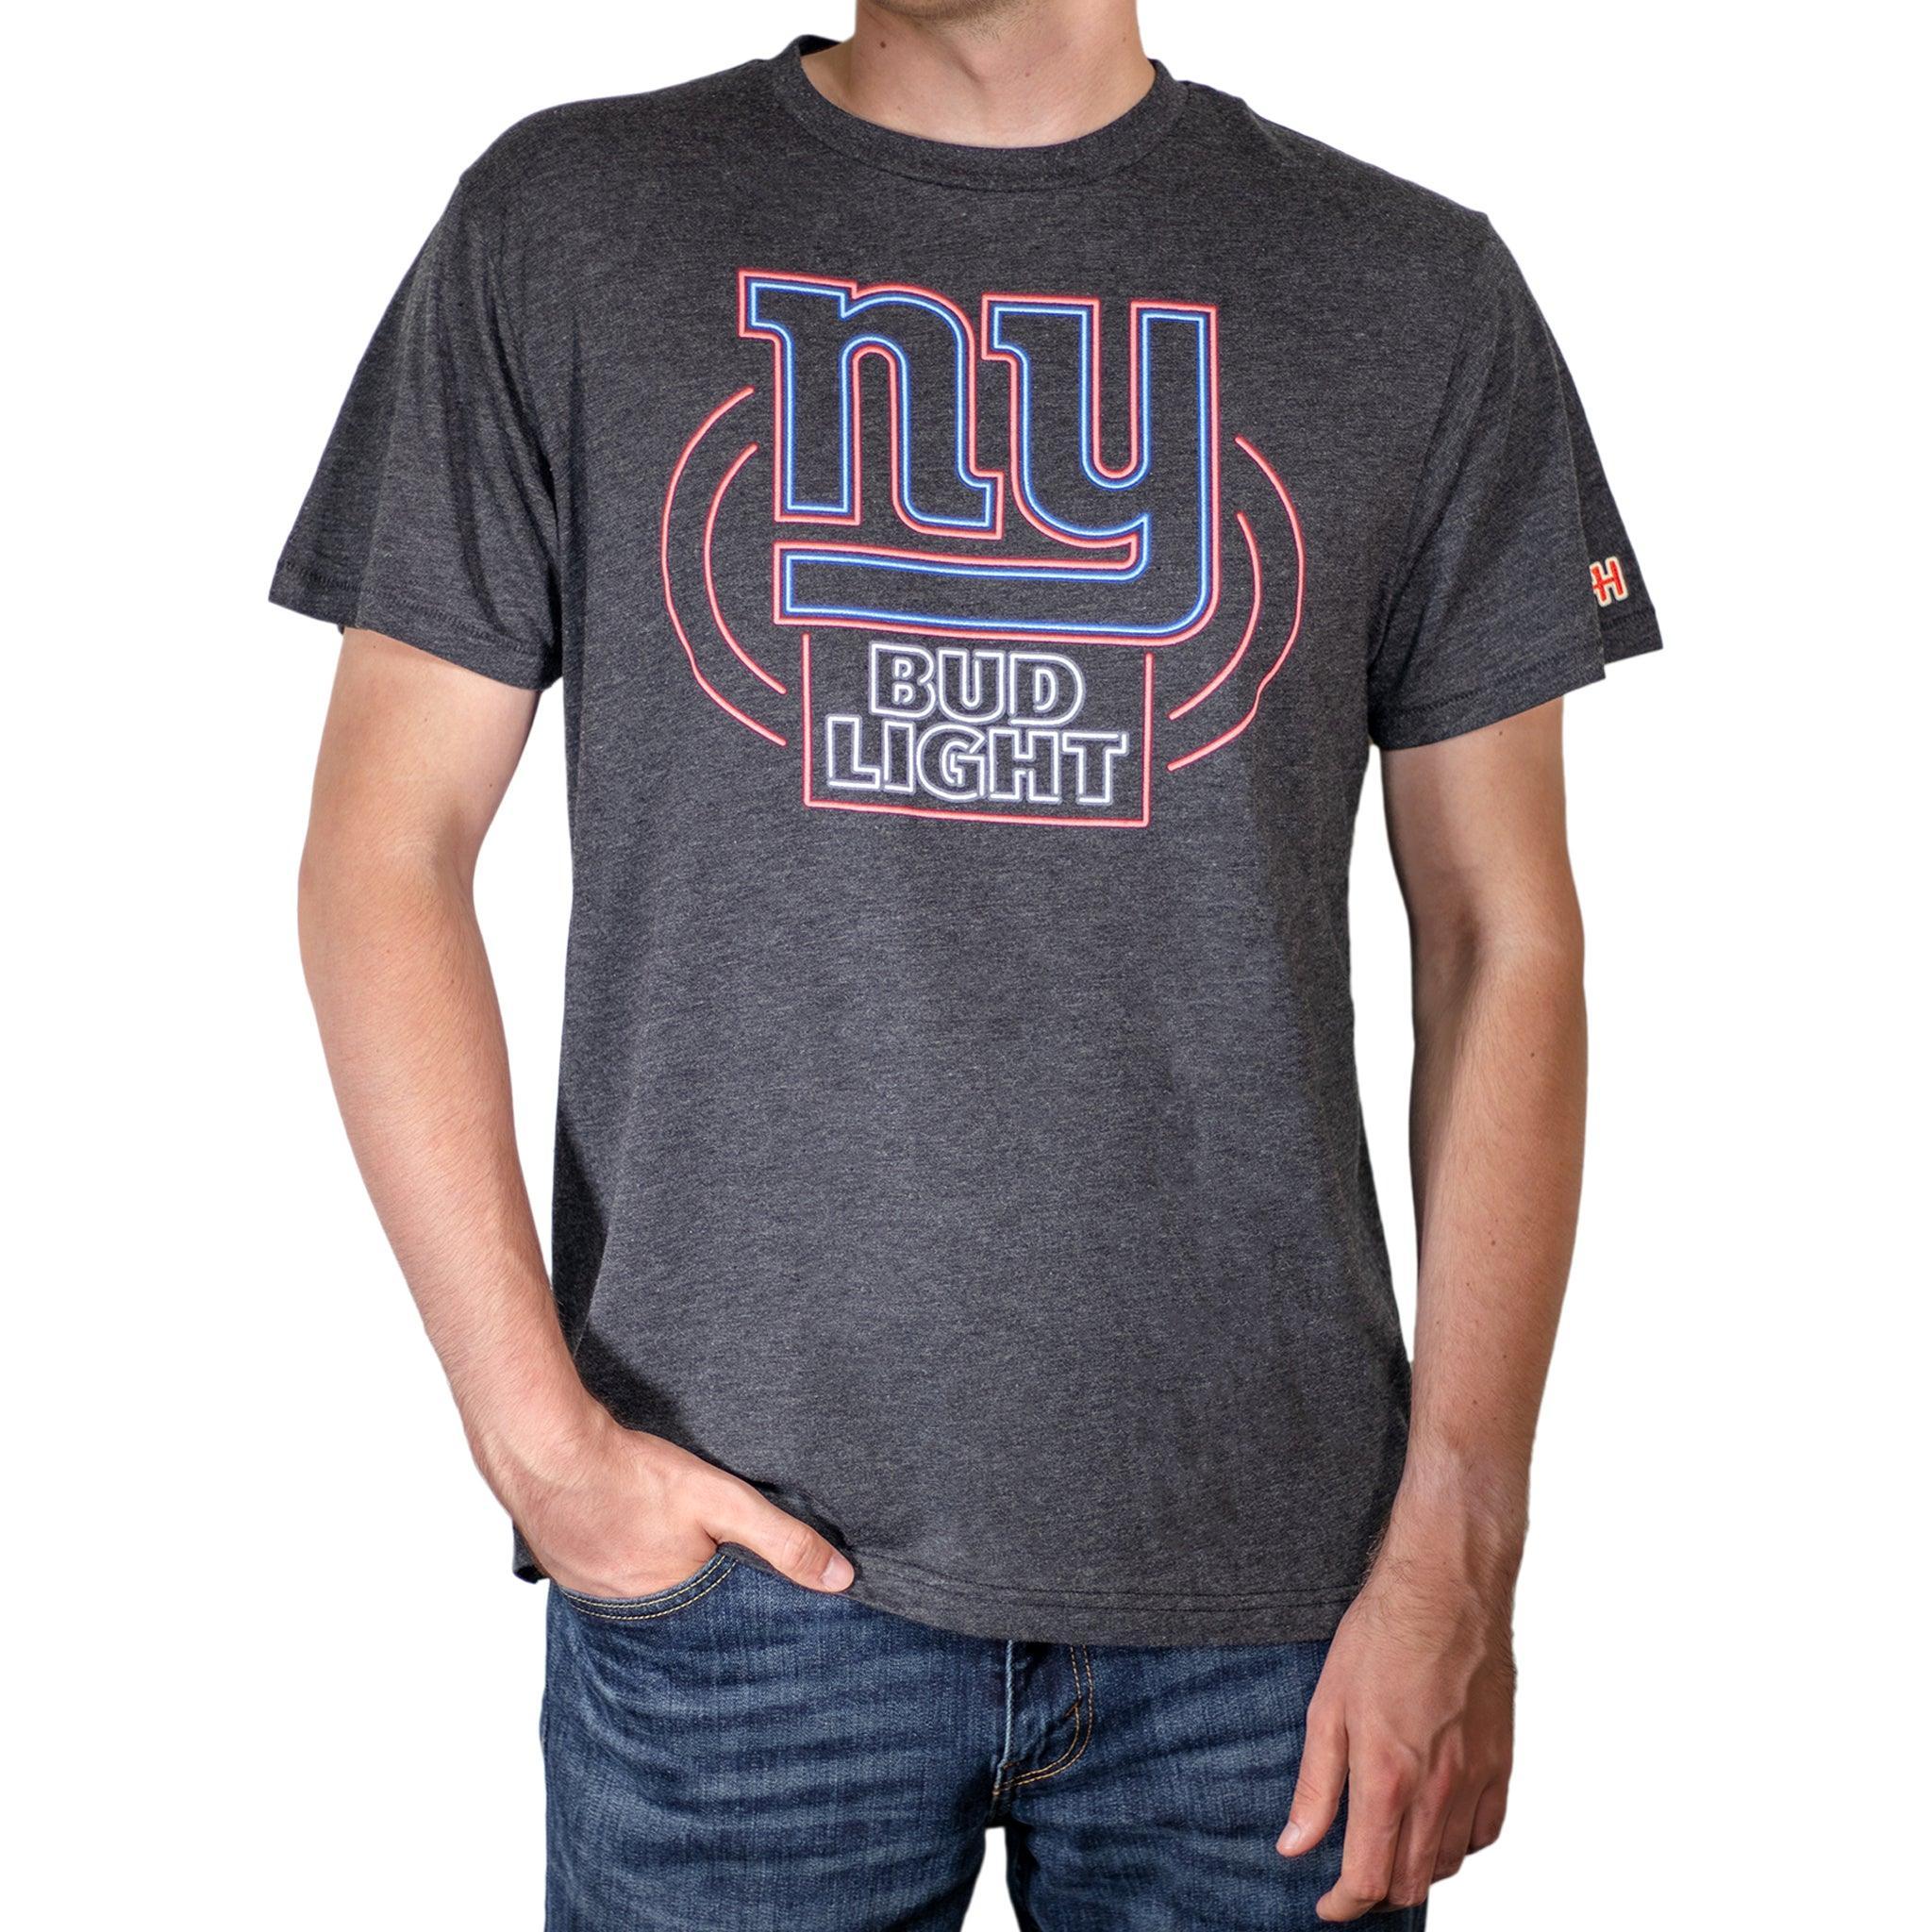 New York Giants Gear, Jersey, Apparel, Merchandise